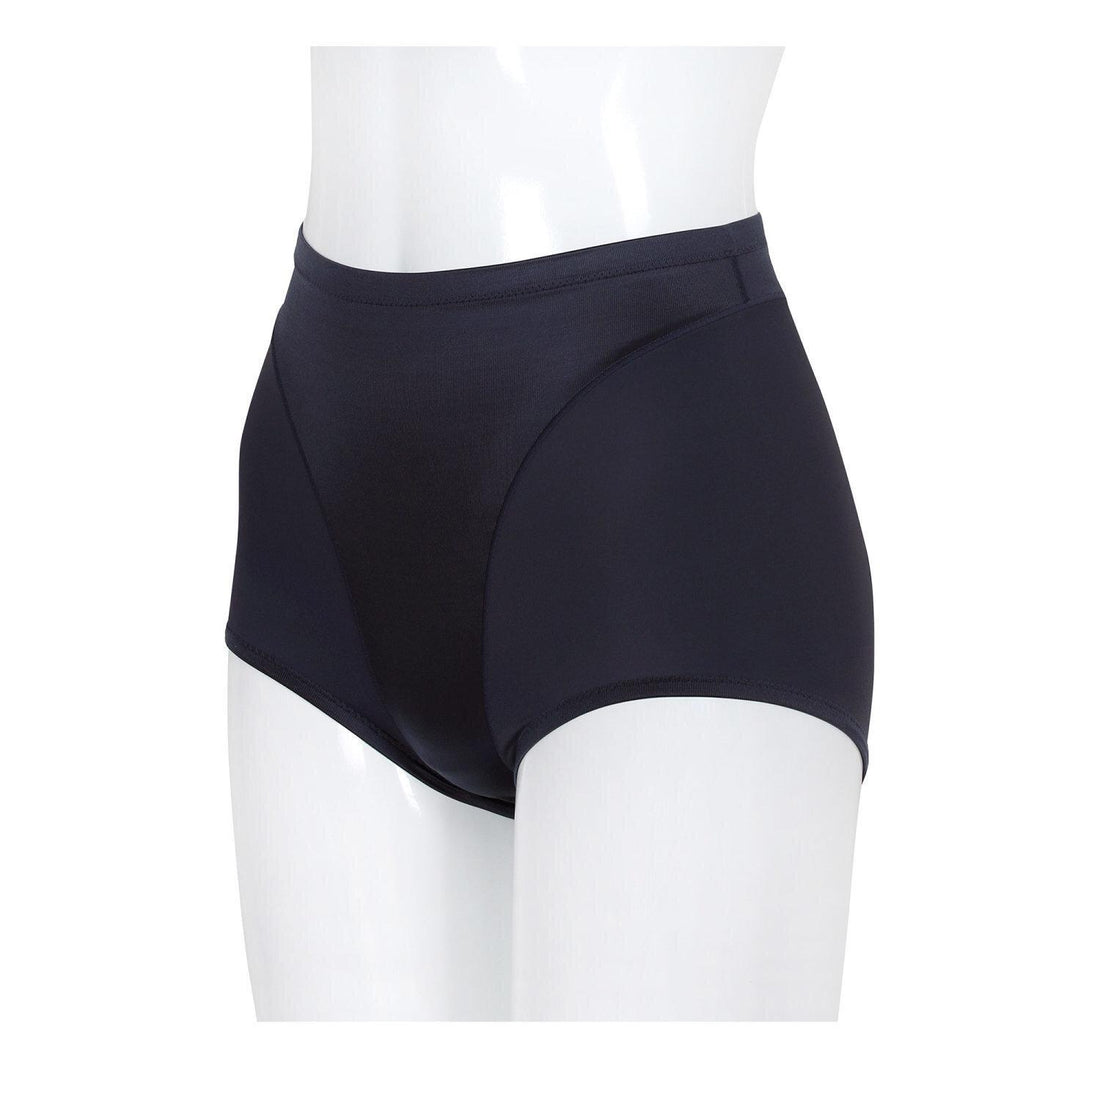 Wacoal Shapewear Hips กางเกงกระชับหน้าท้อง รุ่น WY1128 สีดำ (BL)